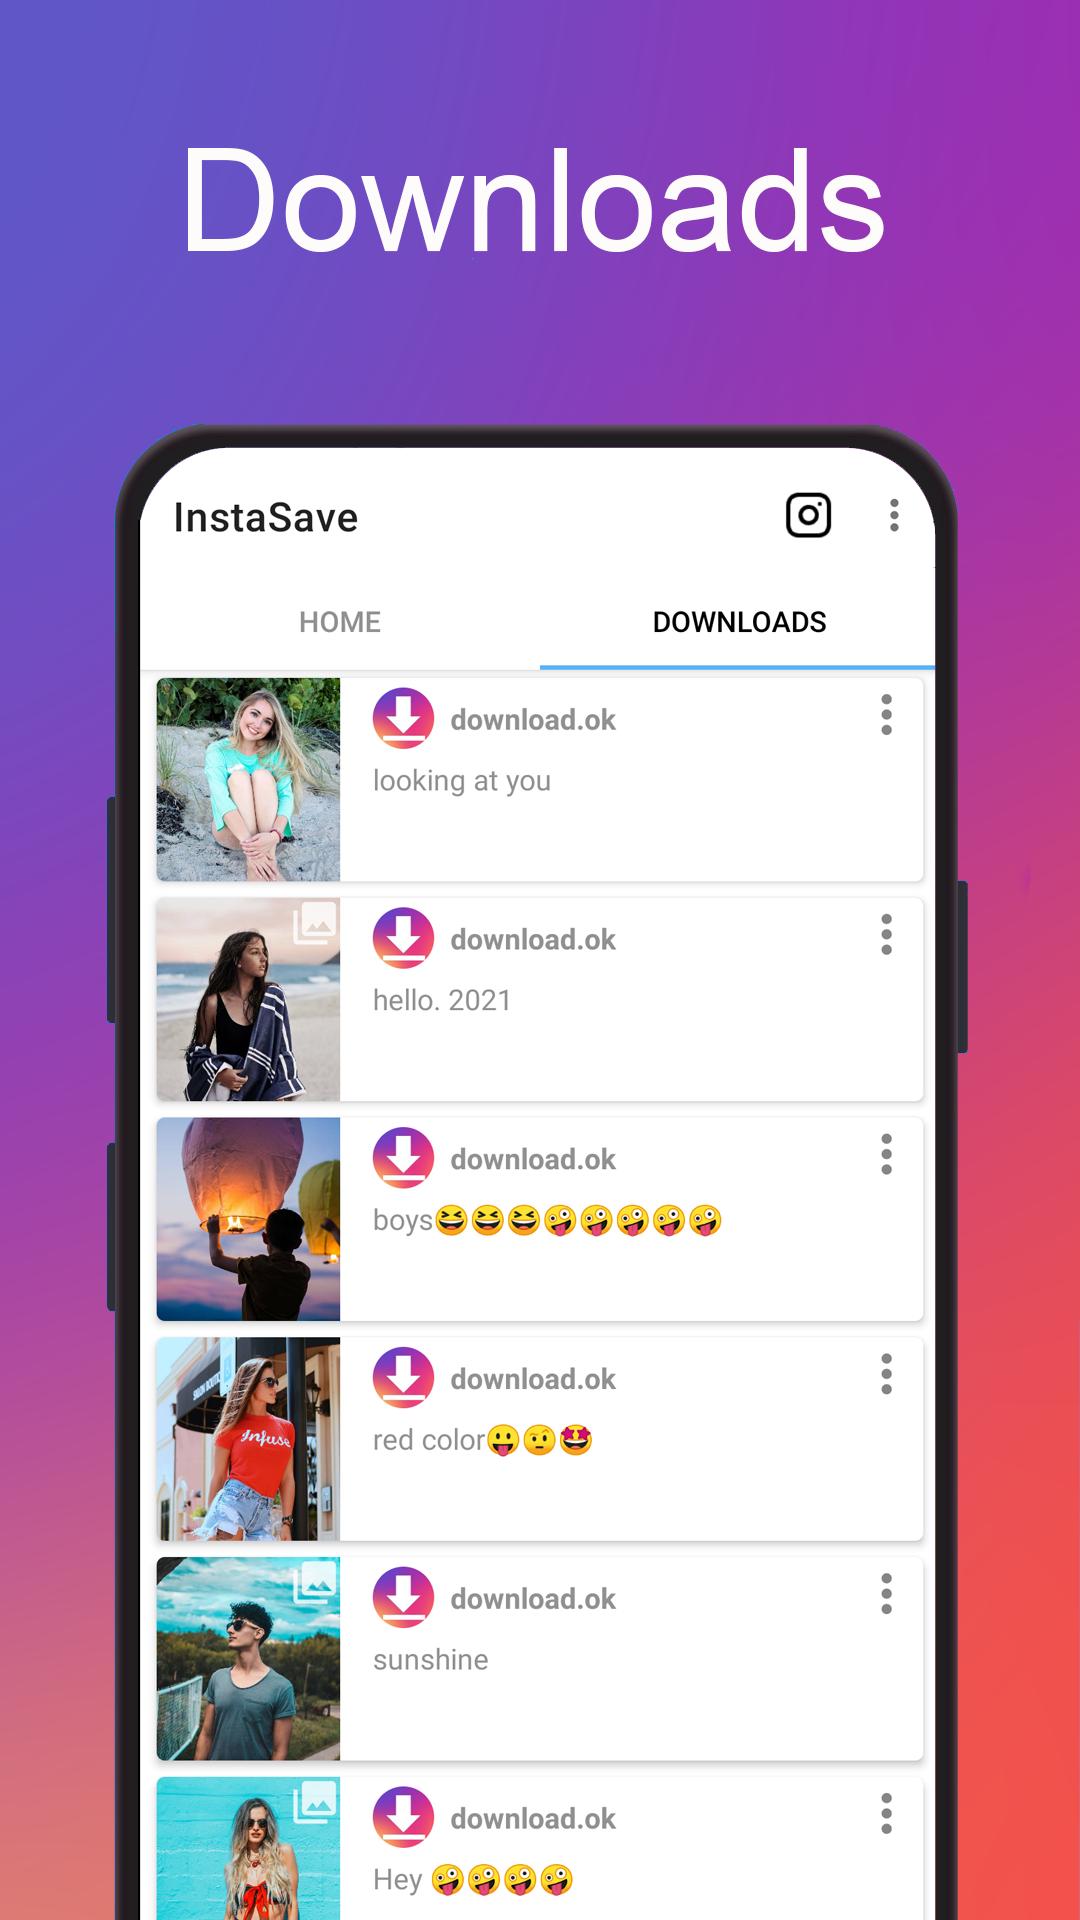 Instake - Photo & Video Downloader for Instagram